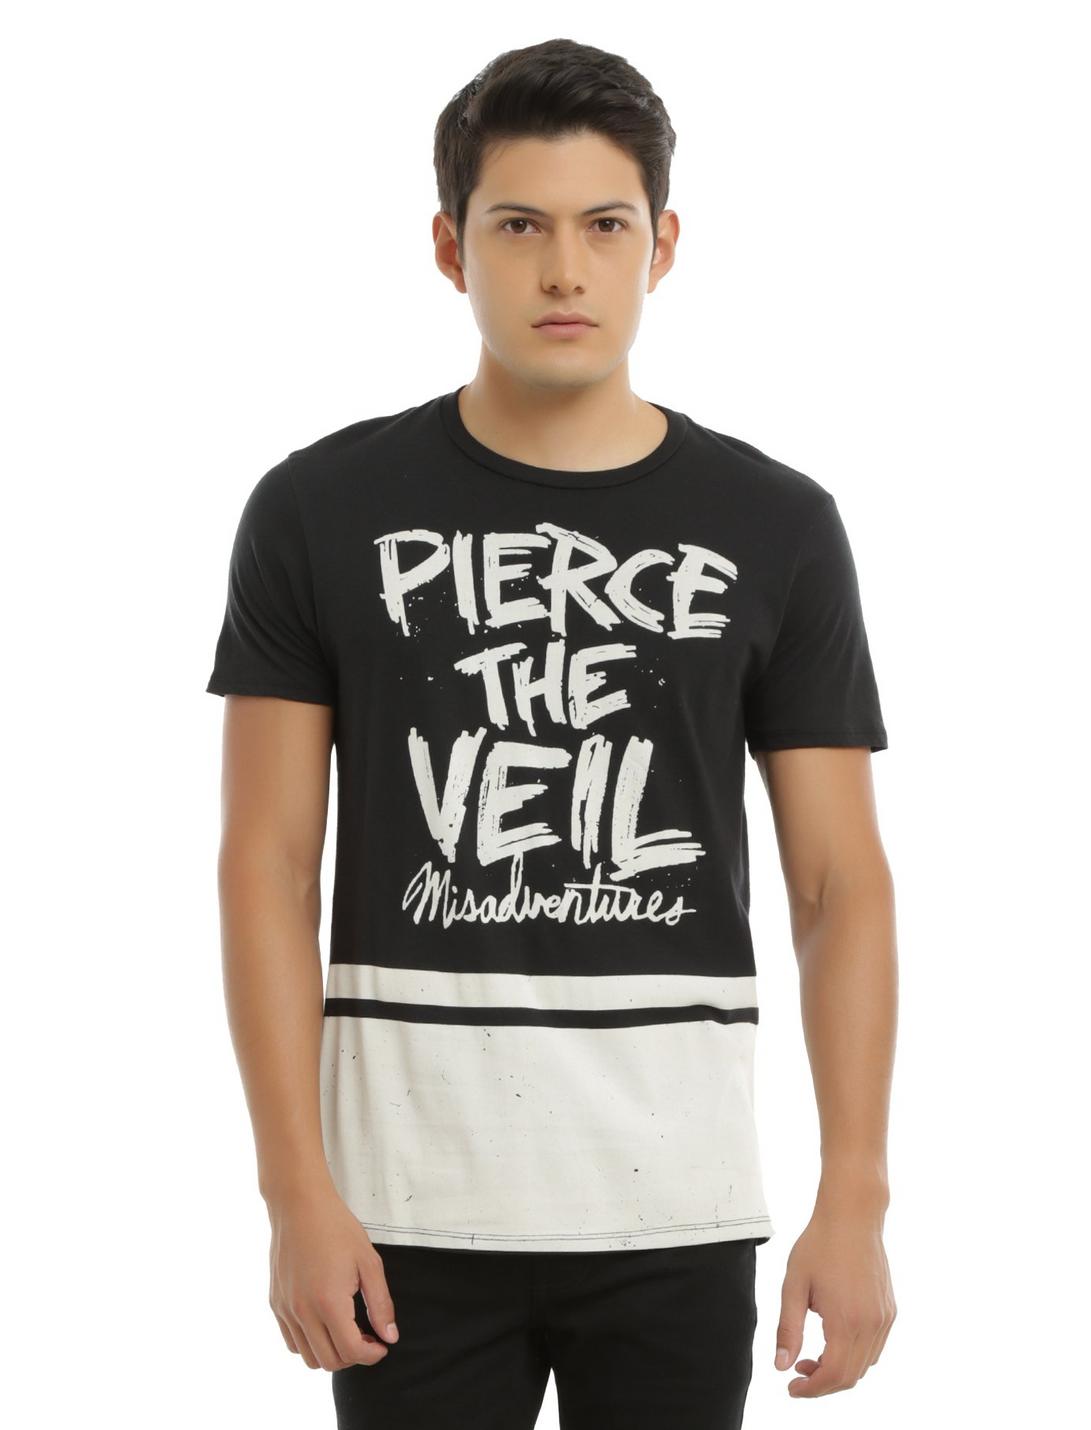 Pierce The Veil Black & White Misadventures T-Shirt, BLACK, hi-res